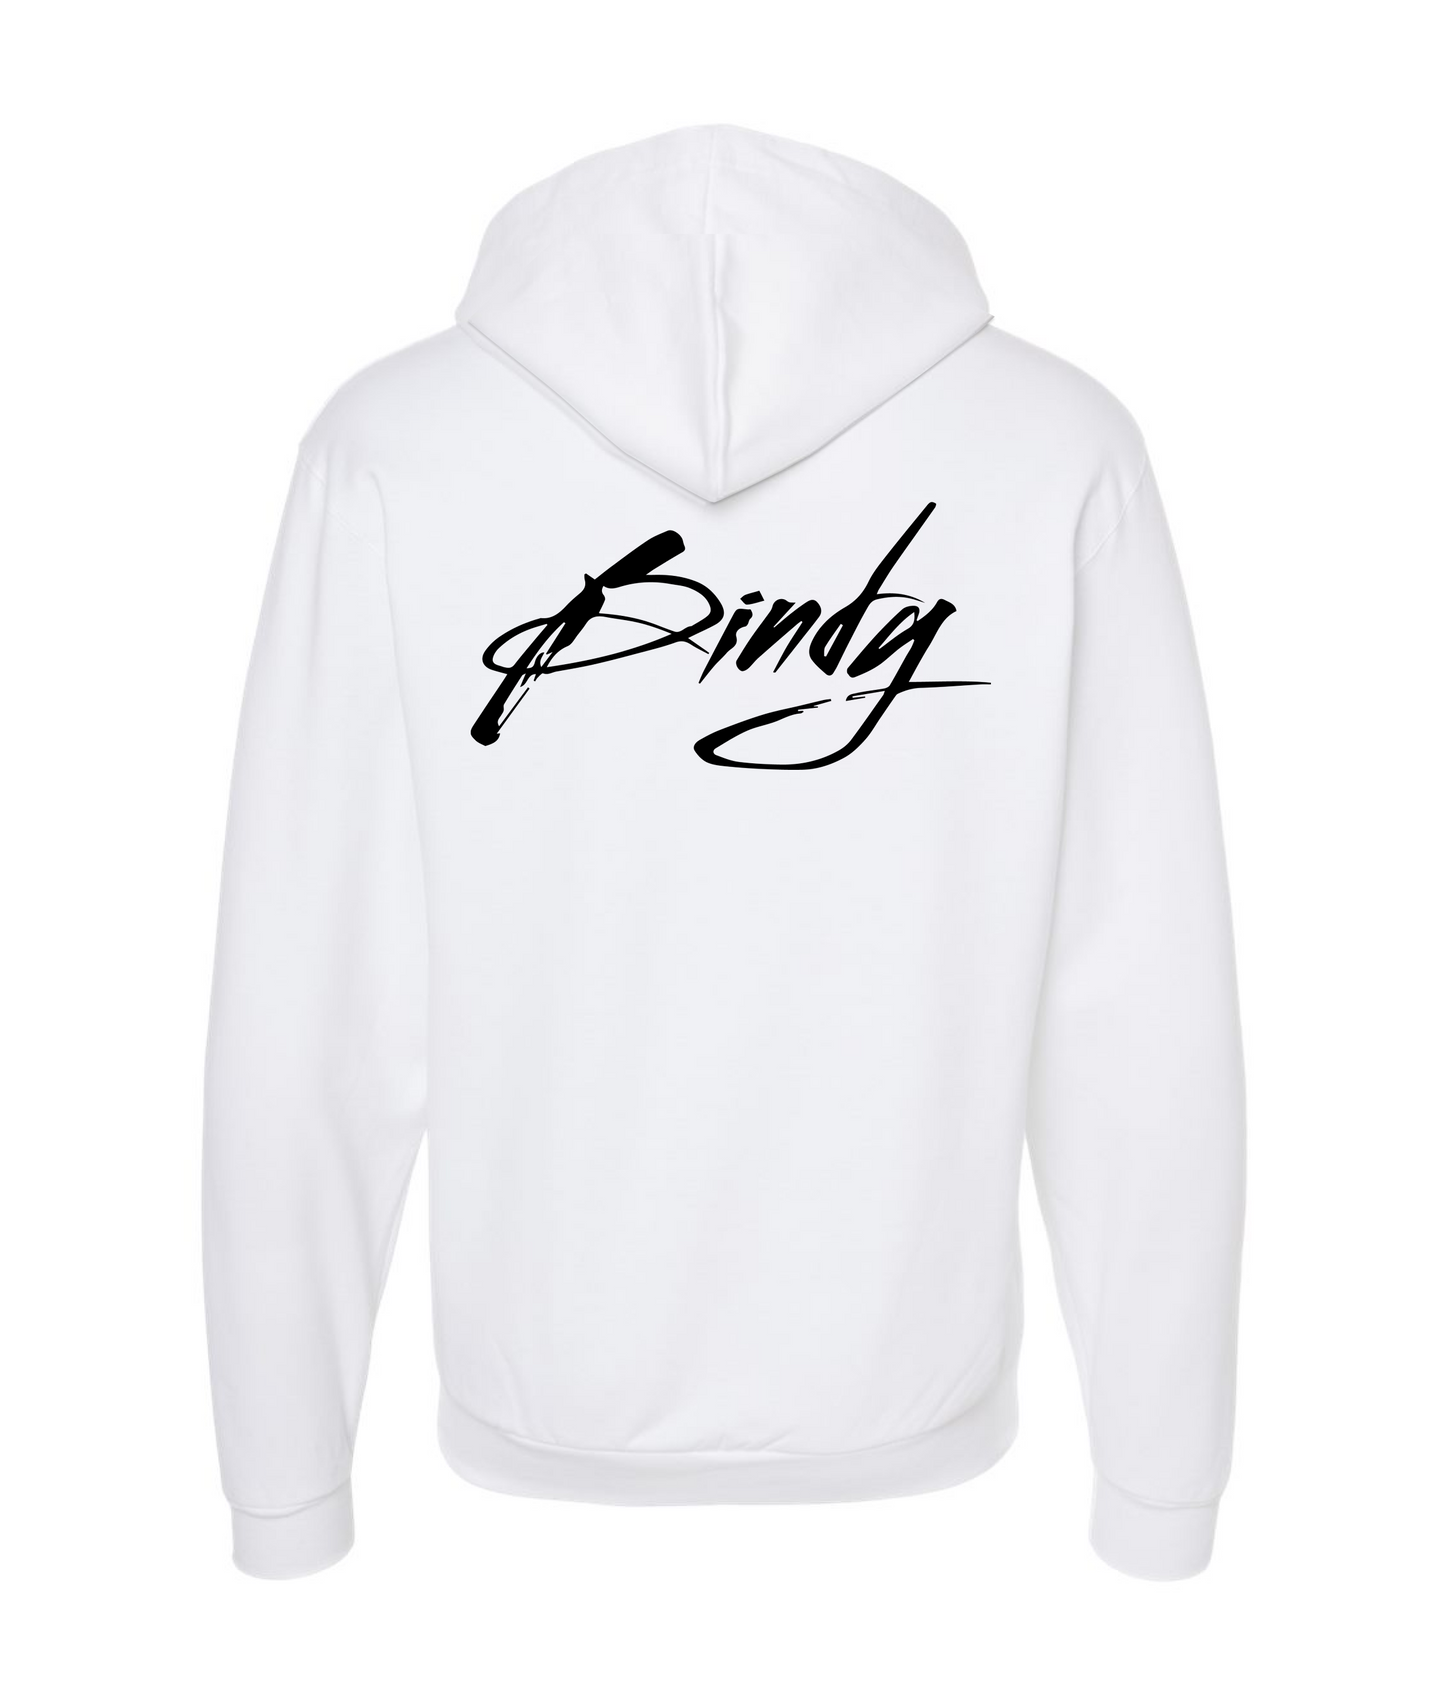 Bindy - Logo White ZHood